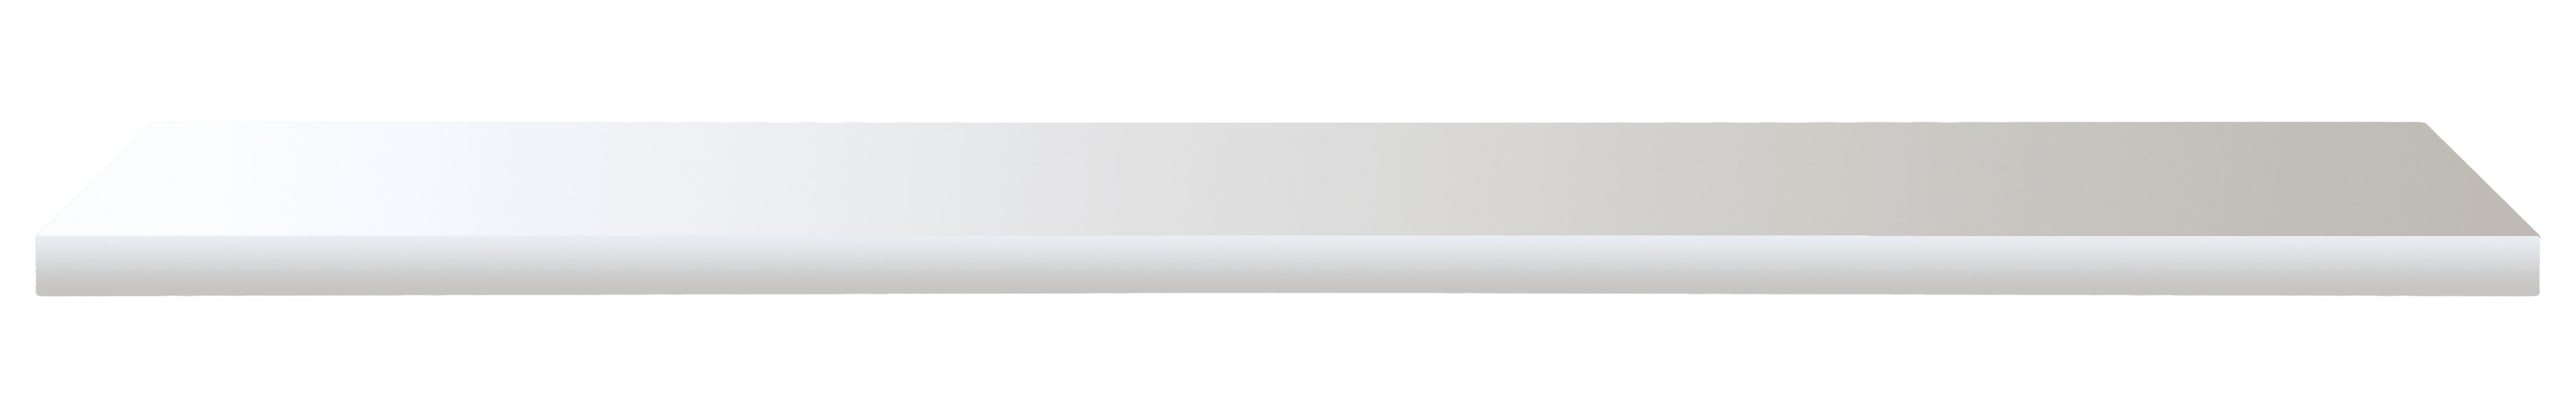 Image of Wickes Gloss White Radiator Shelf - 18 x 150 x 1200mm